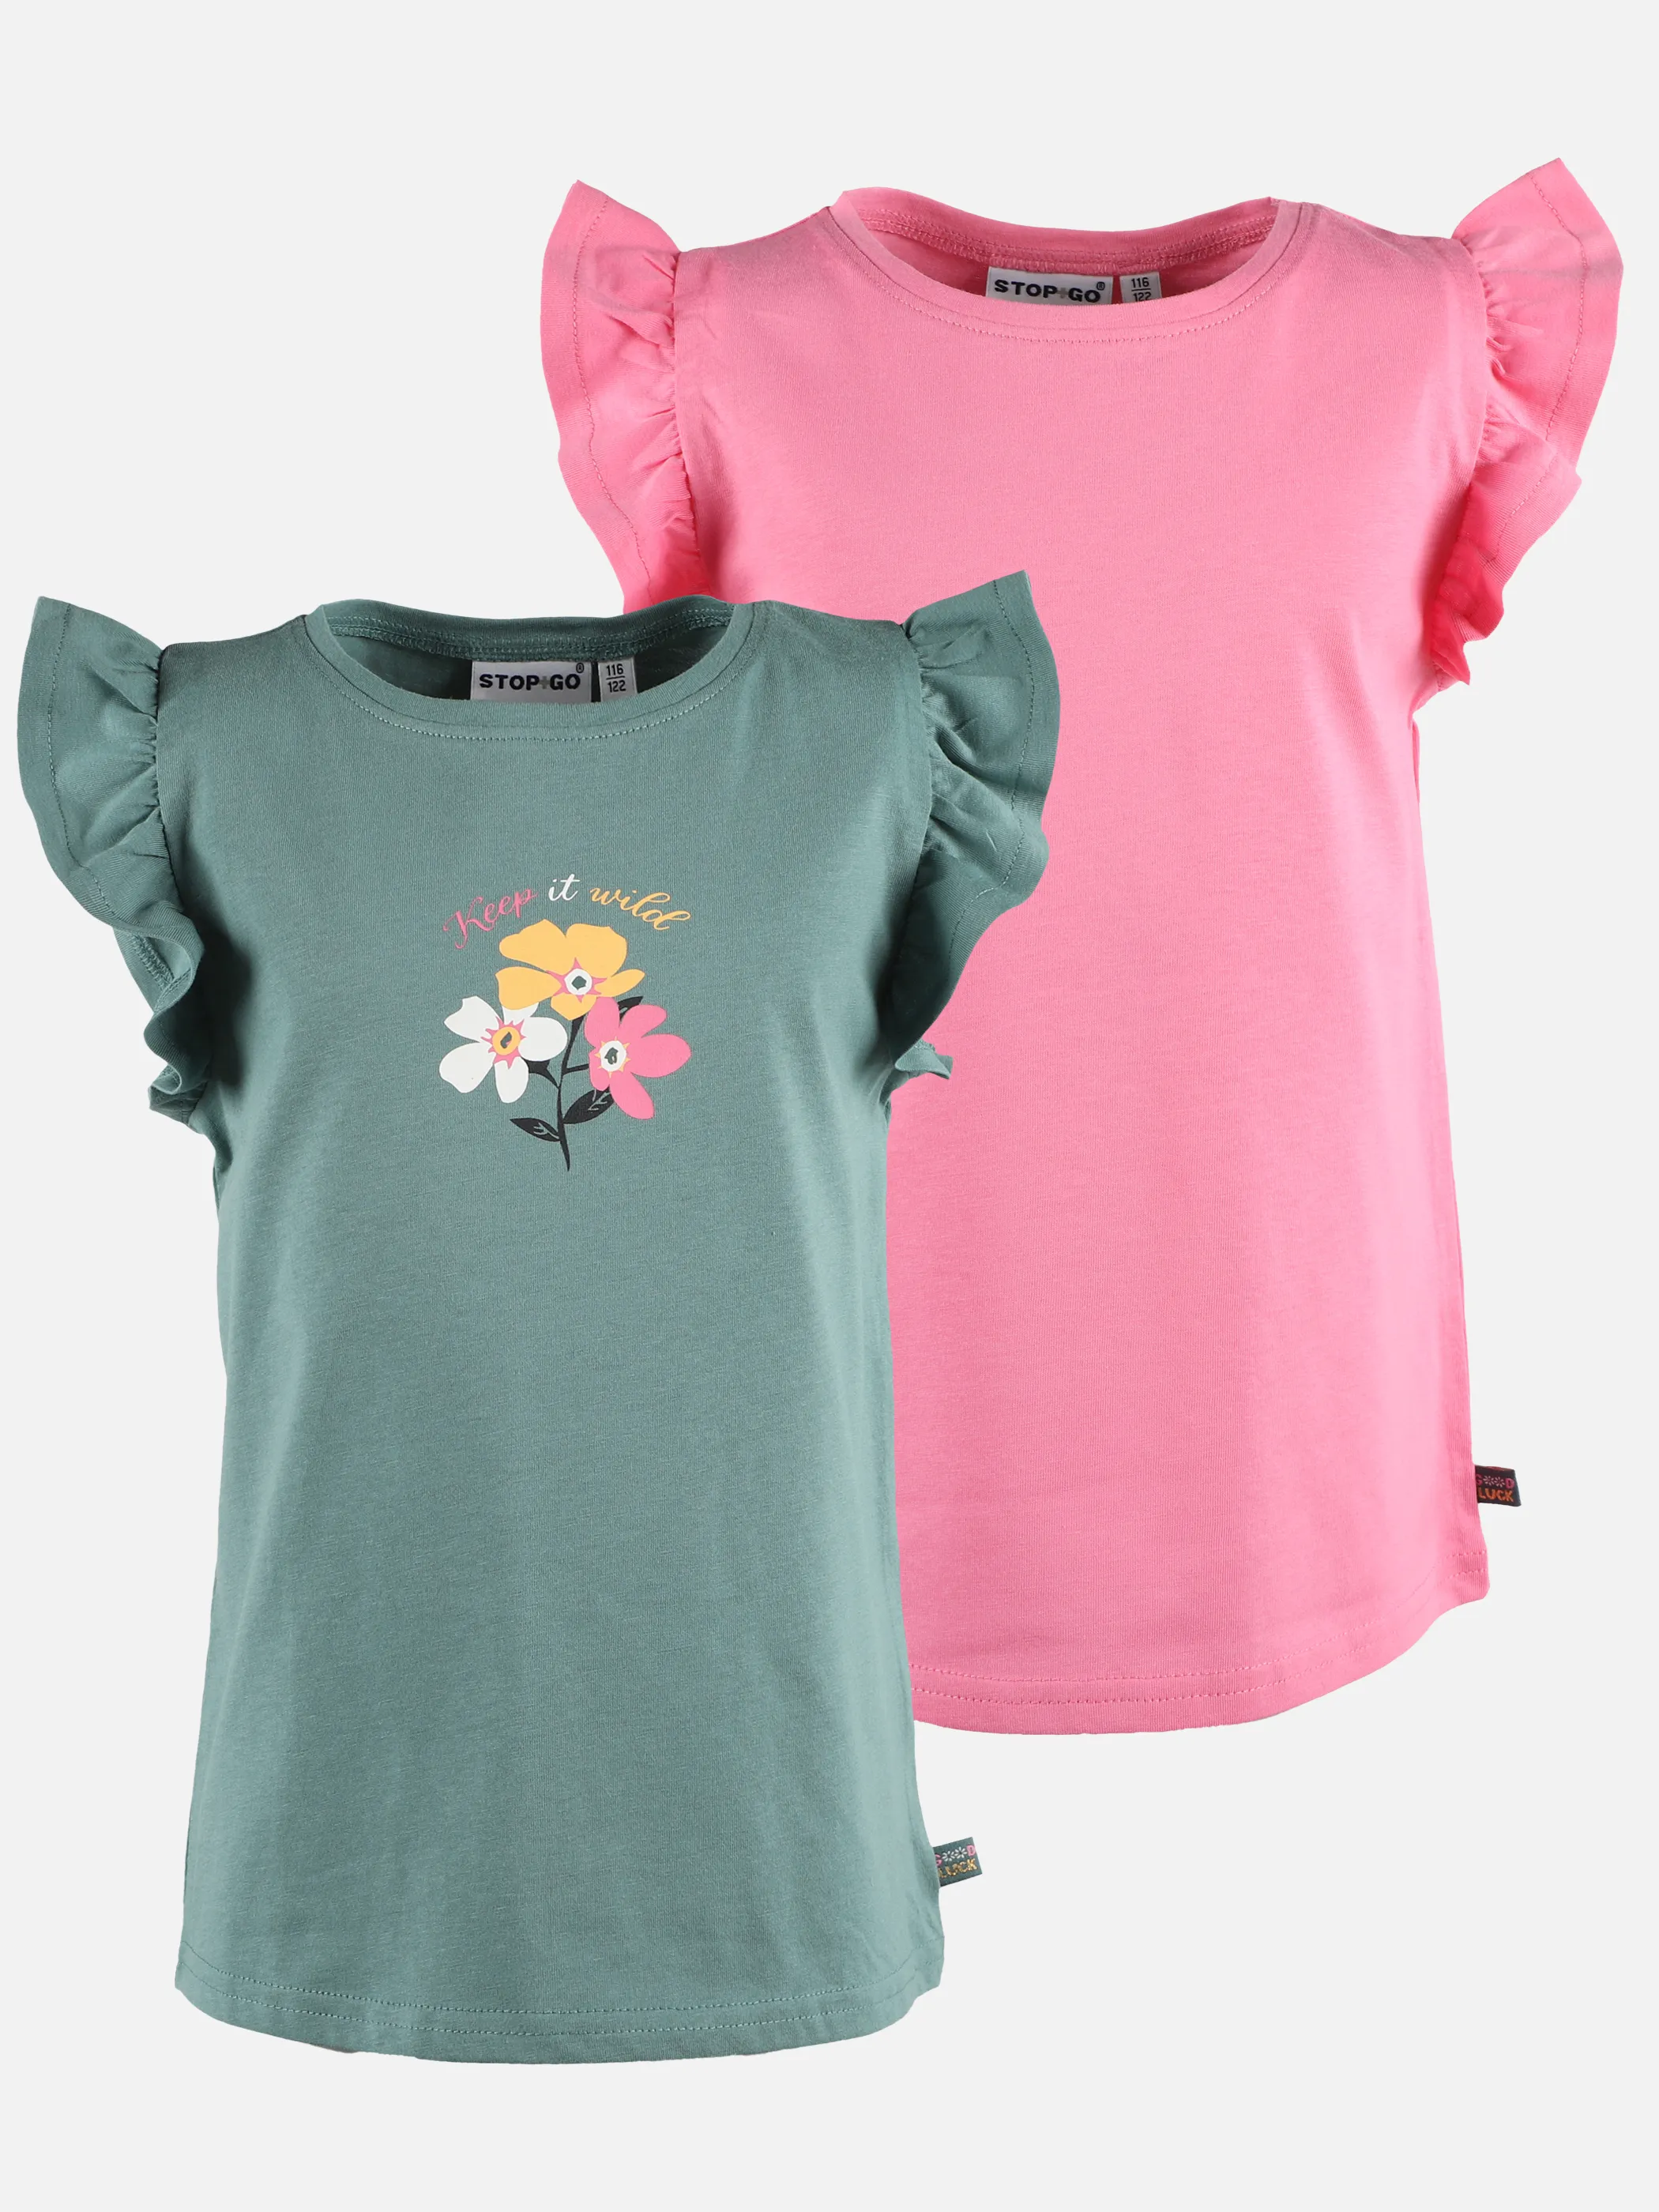 Stop + Go KM 2er Pack T-Shirts uni pink und blau gestreift Rosa 892676 ROSA/BLAU 1